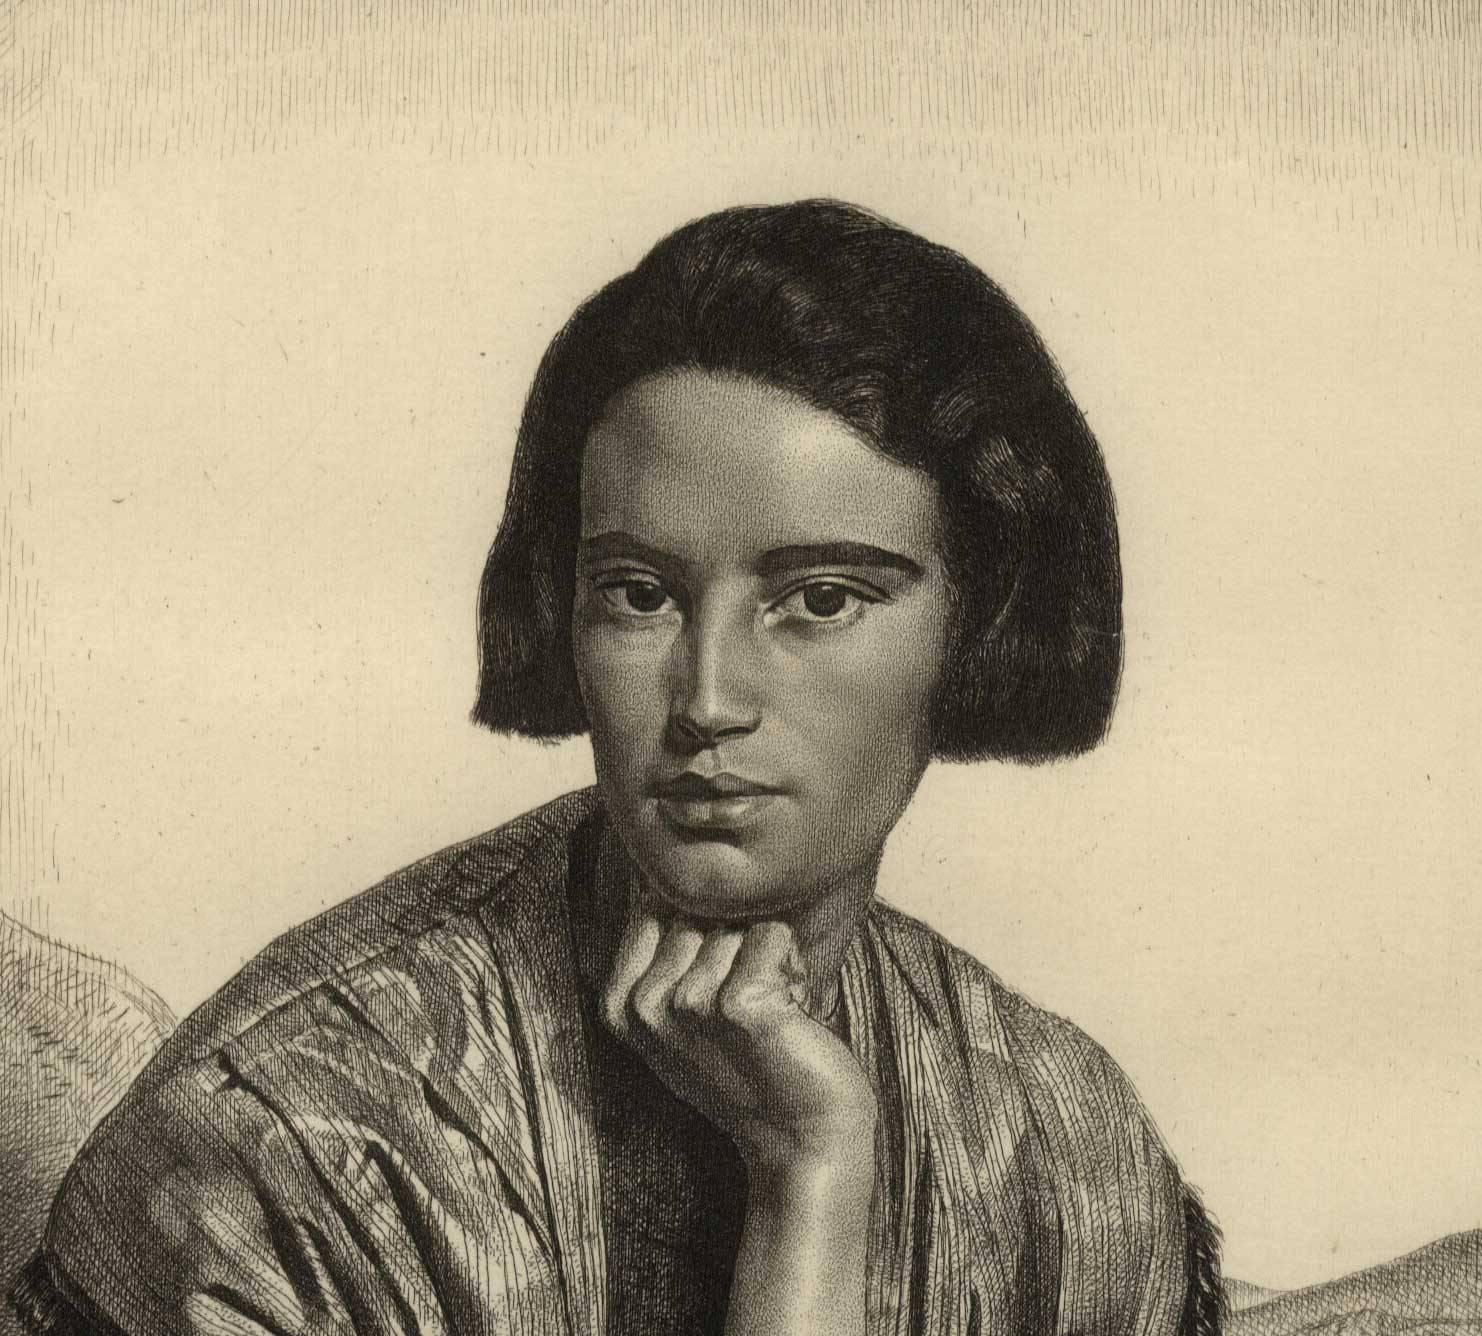 Viba (etched portrait of an elegant woman posed in front of a rocky landscape) - Print by Gerald Leslie Brockhurst